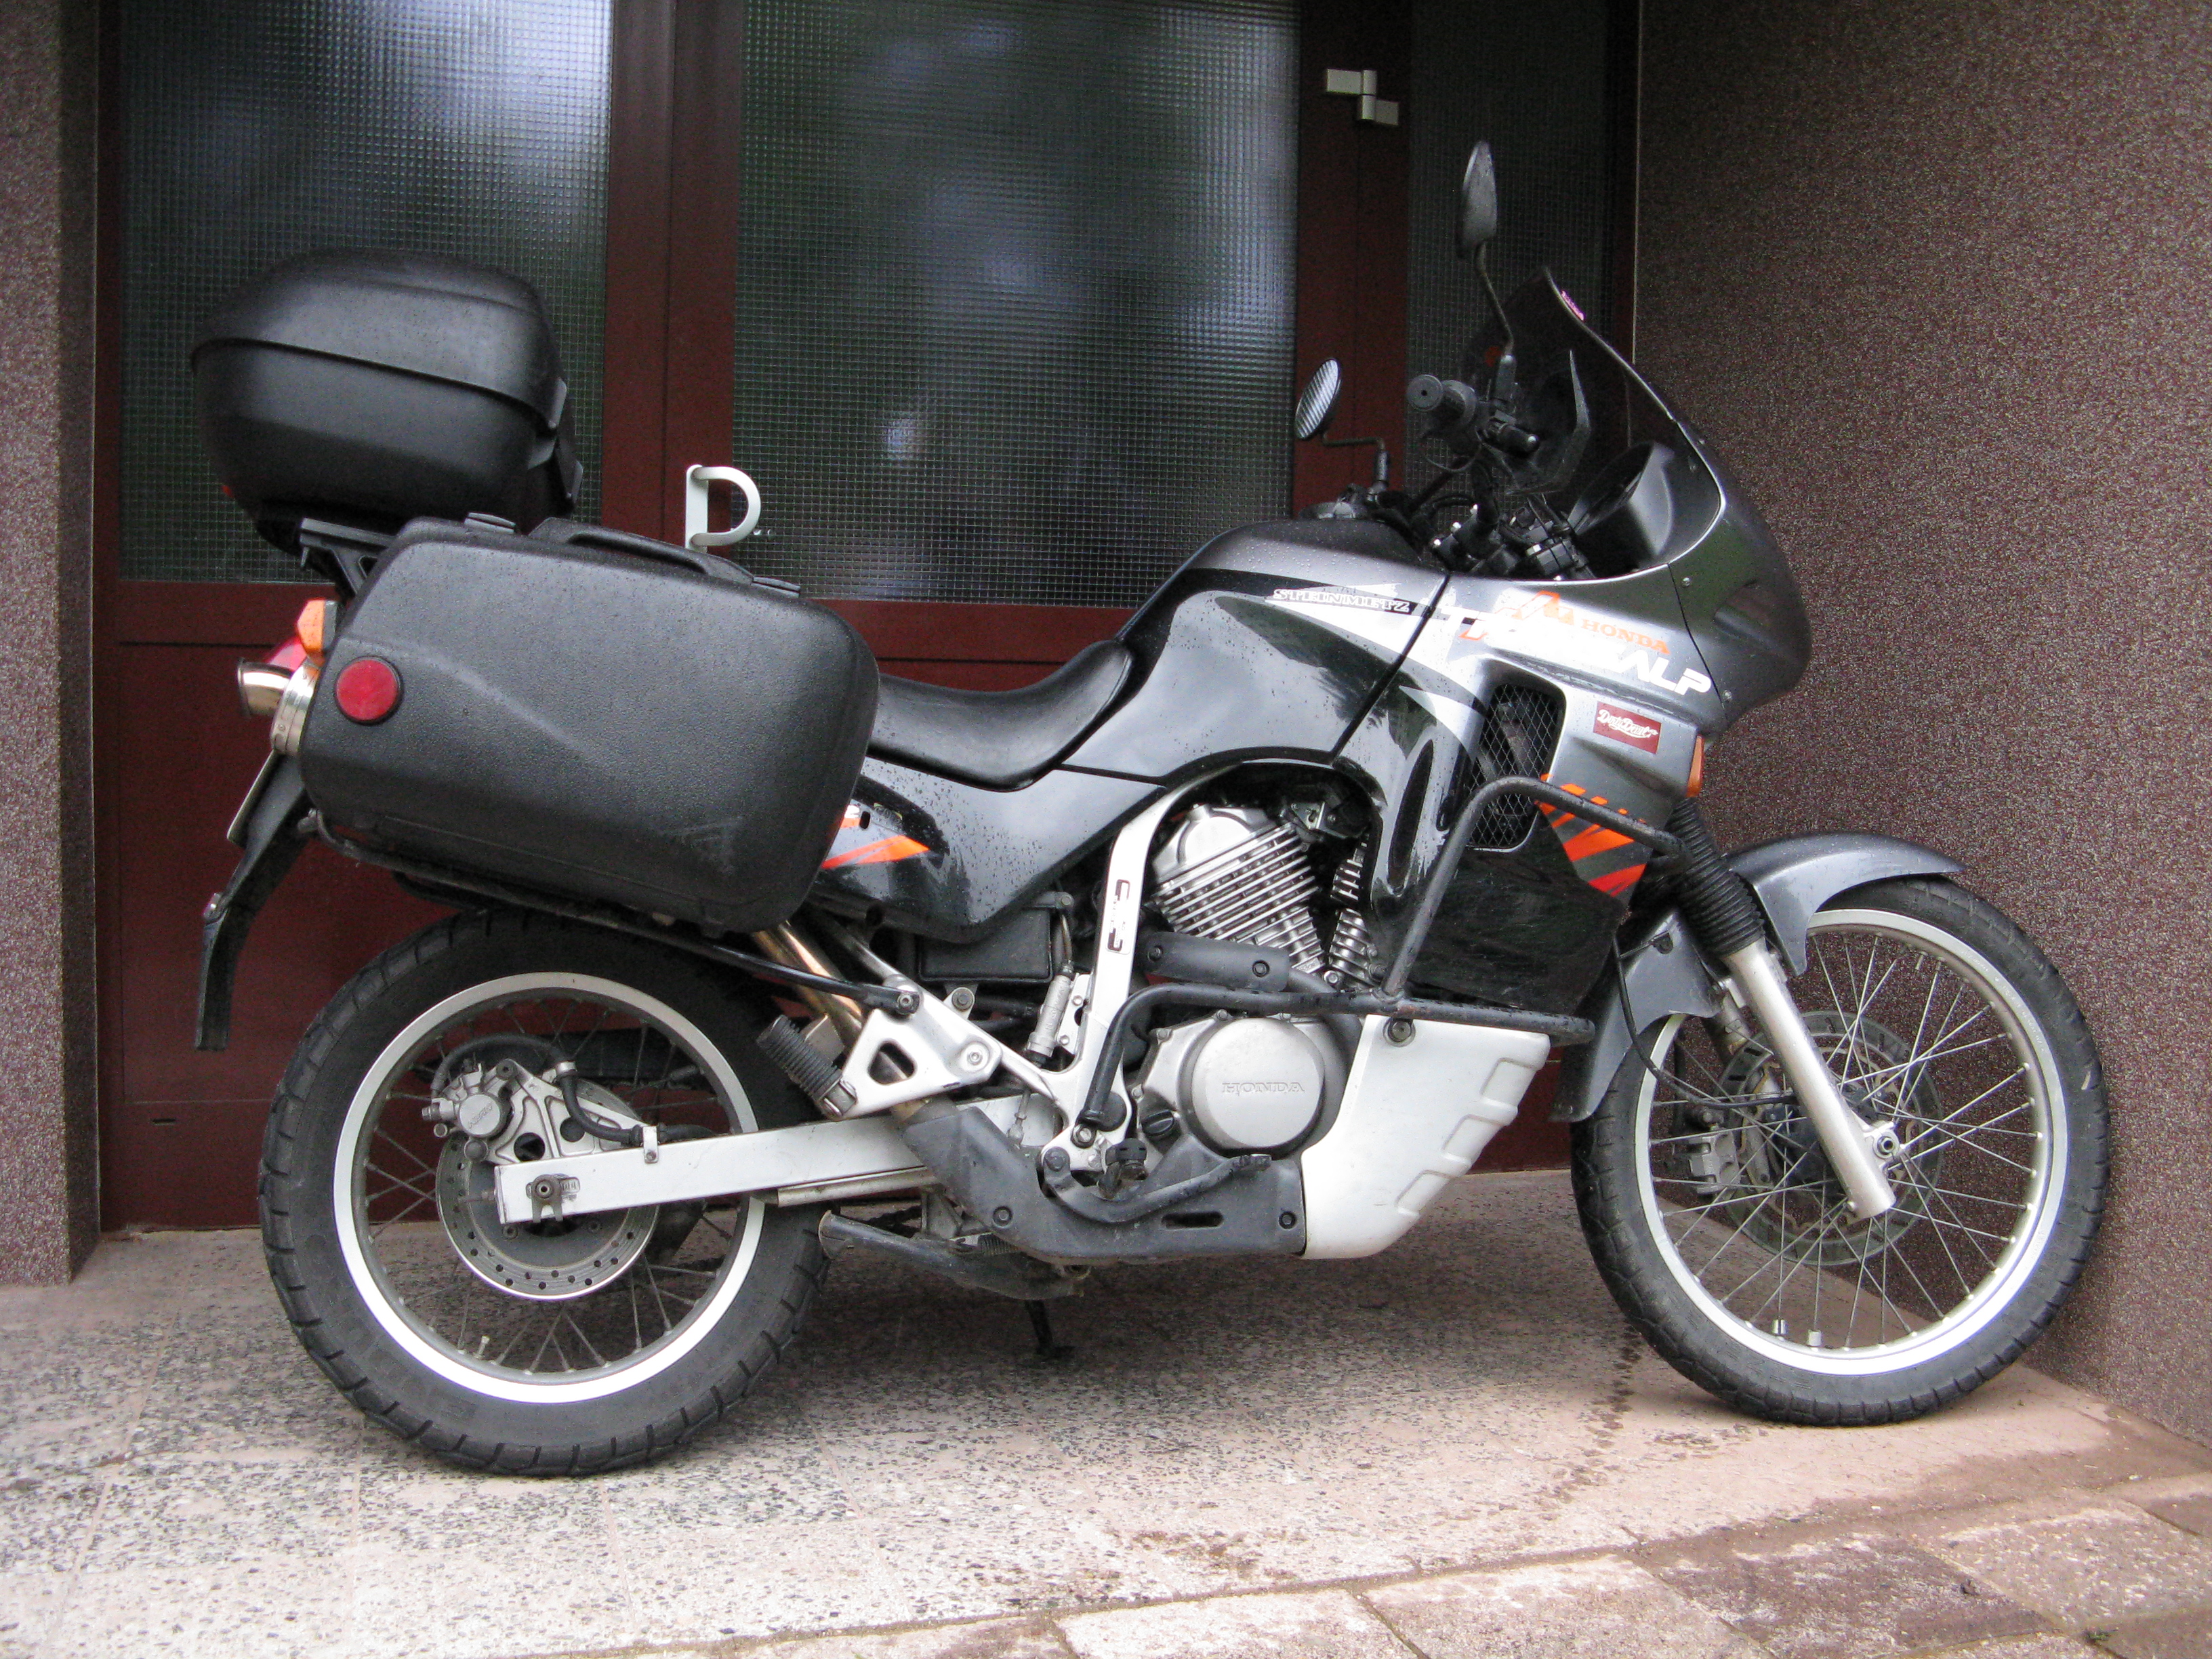 Тест-драйв мотоцикла honda xl600v transalp от моторевю.